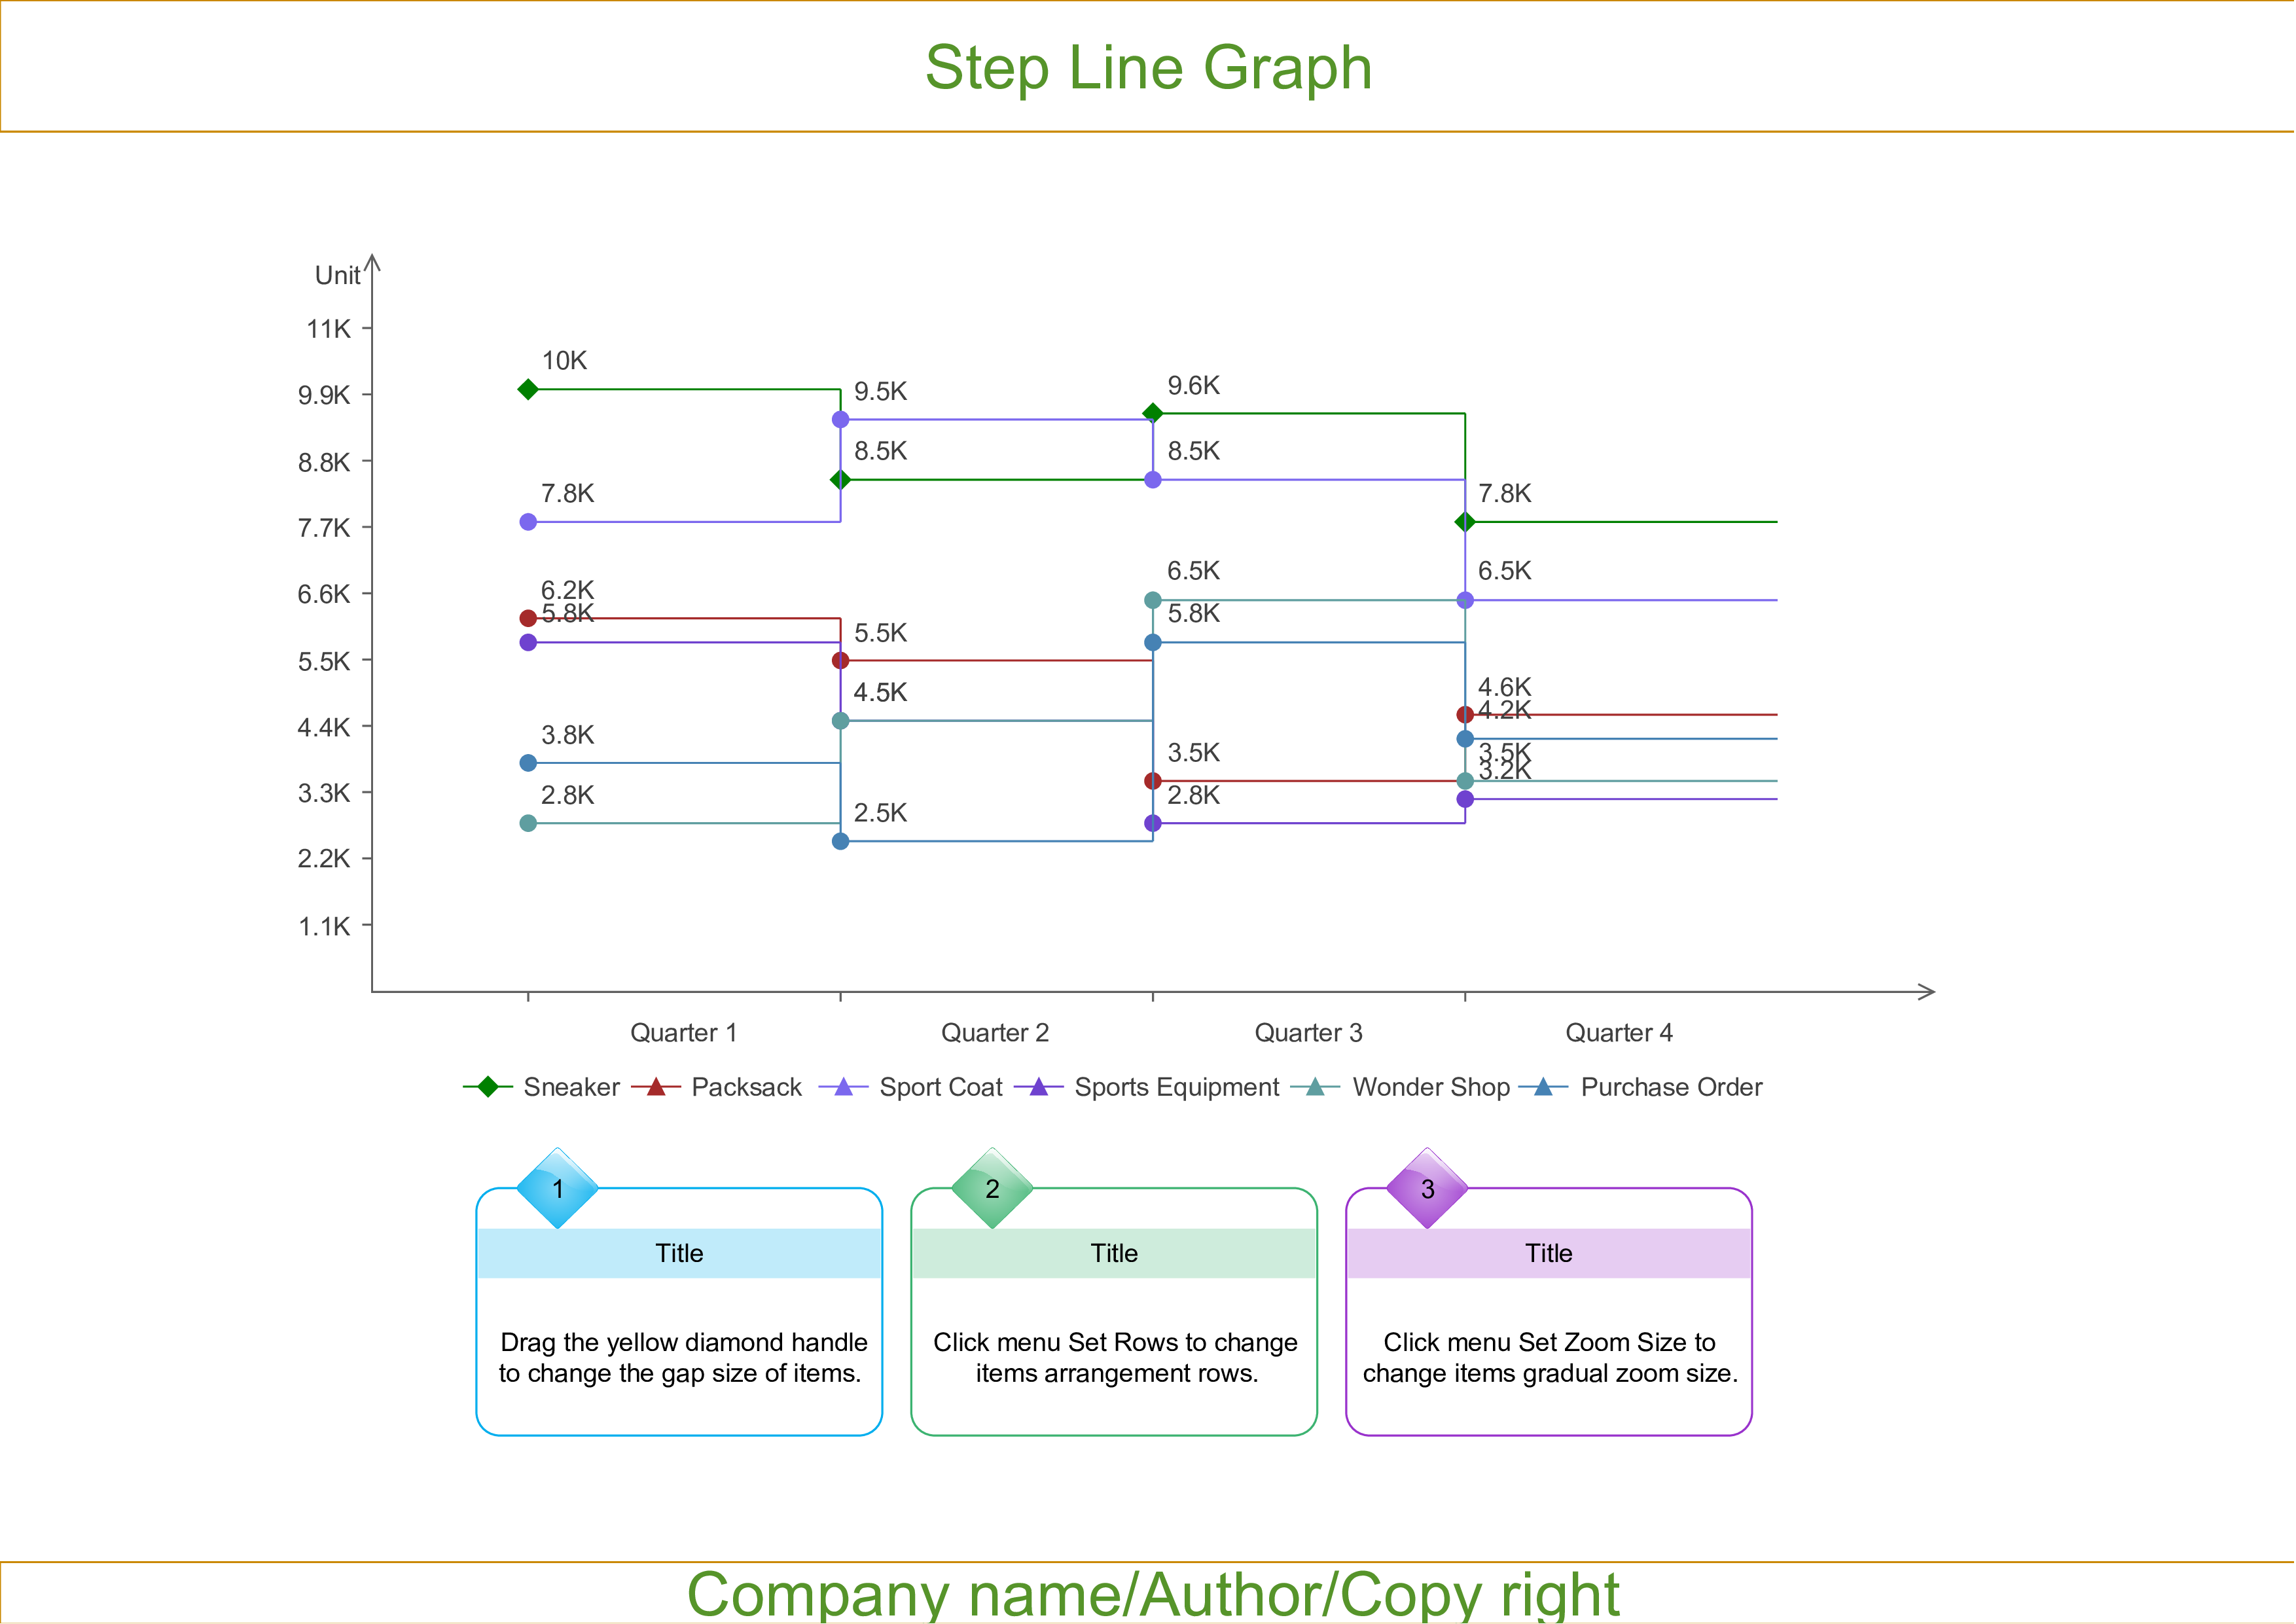 Steps line. Step line. Stepped-line graph. Line graph перевод. Шаблон NUMTRANSLATE.